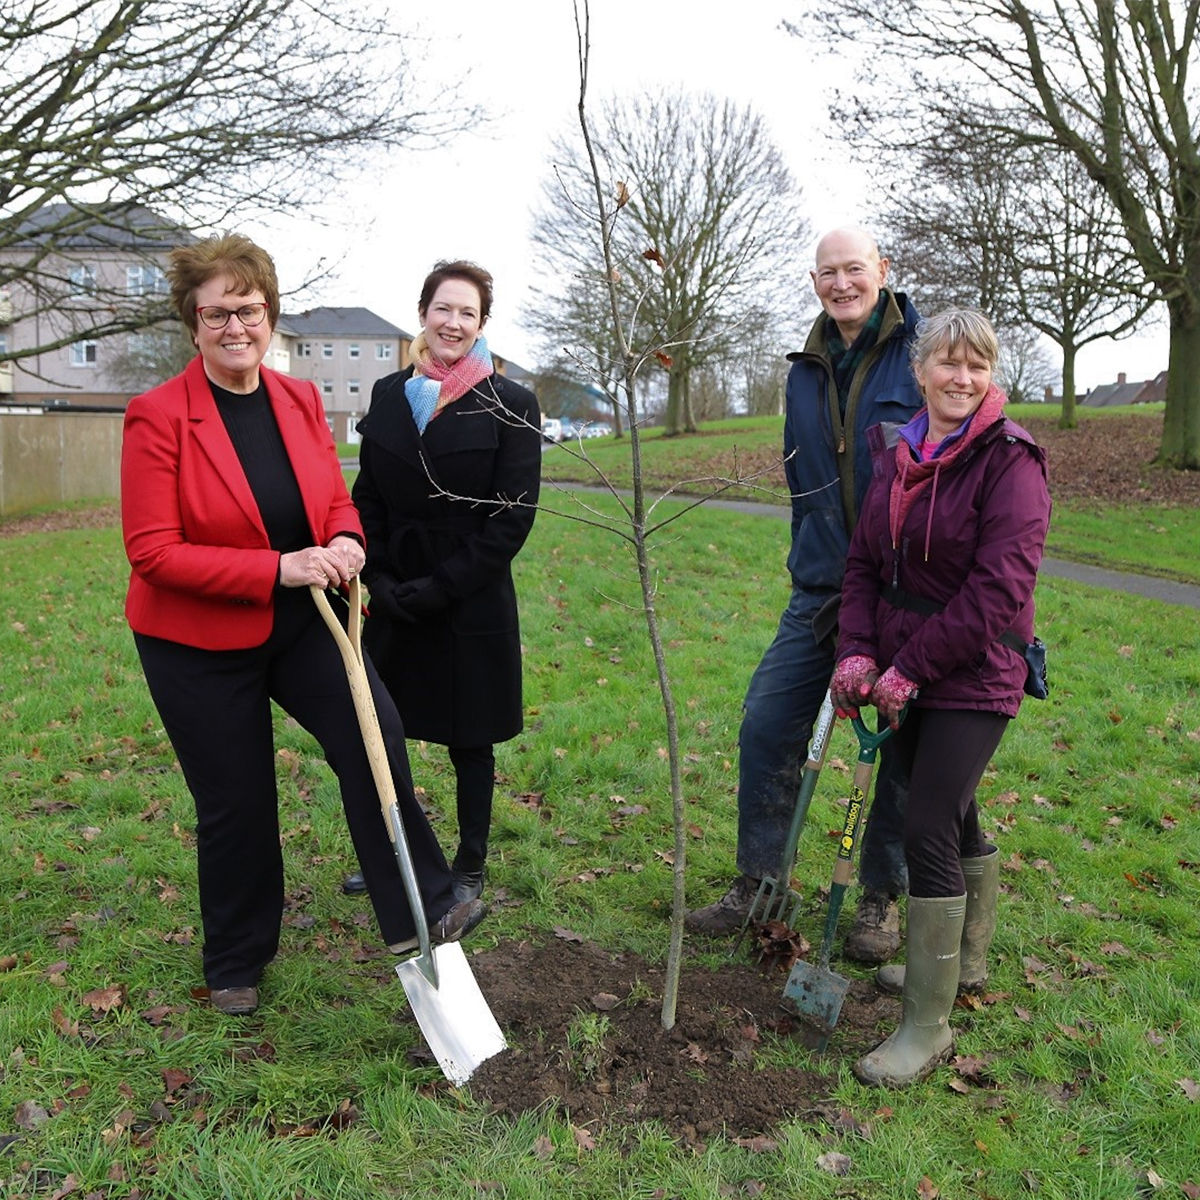 Council plants trees in memory of Her Majesty Queen Elizabeth II